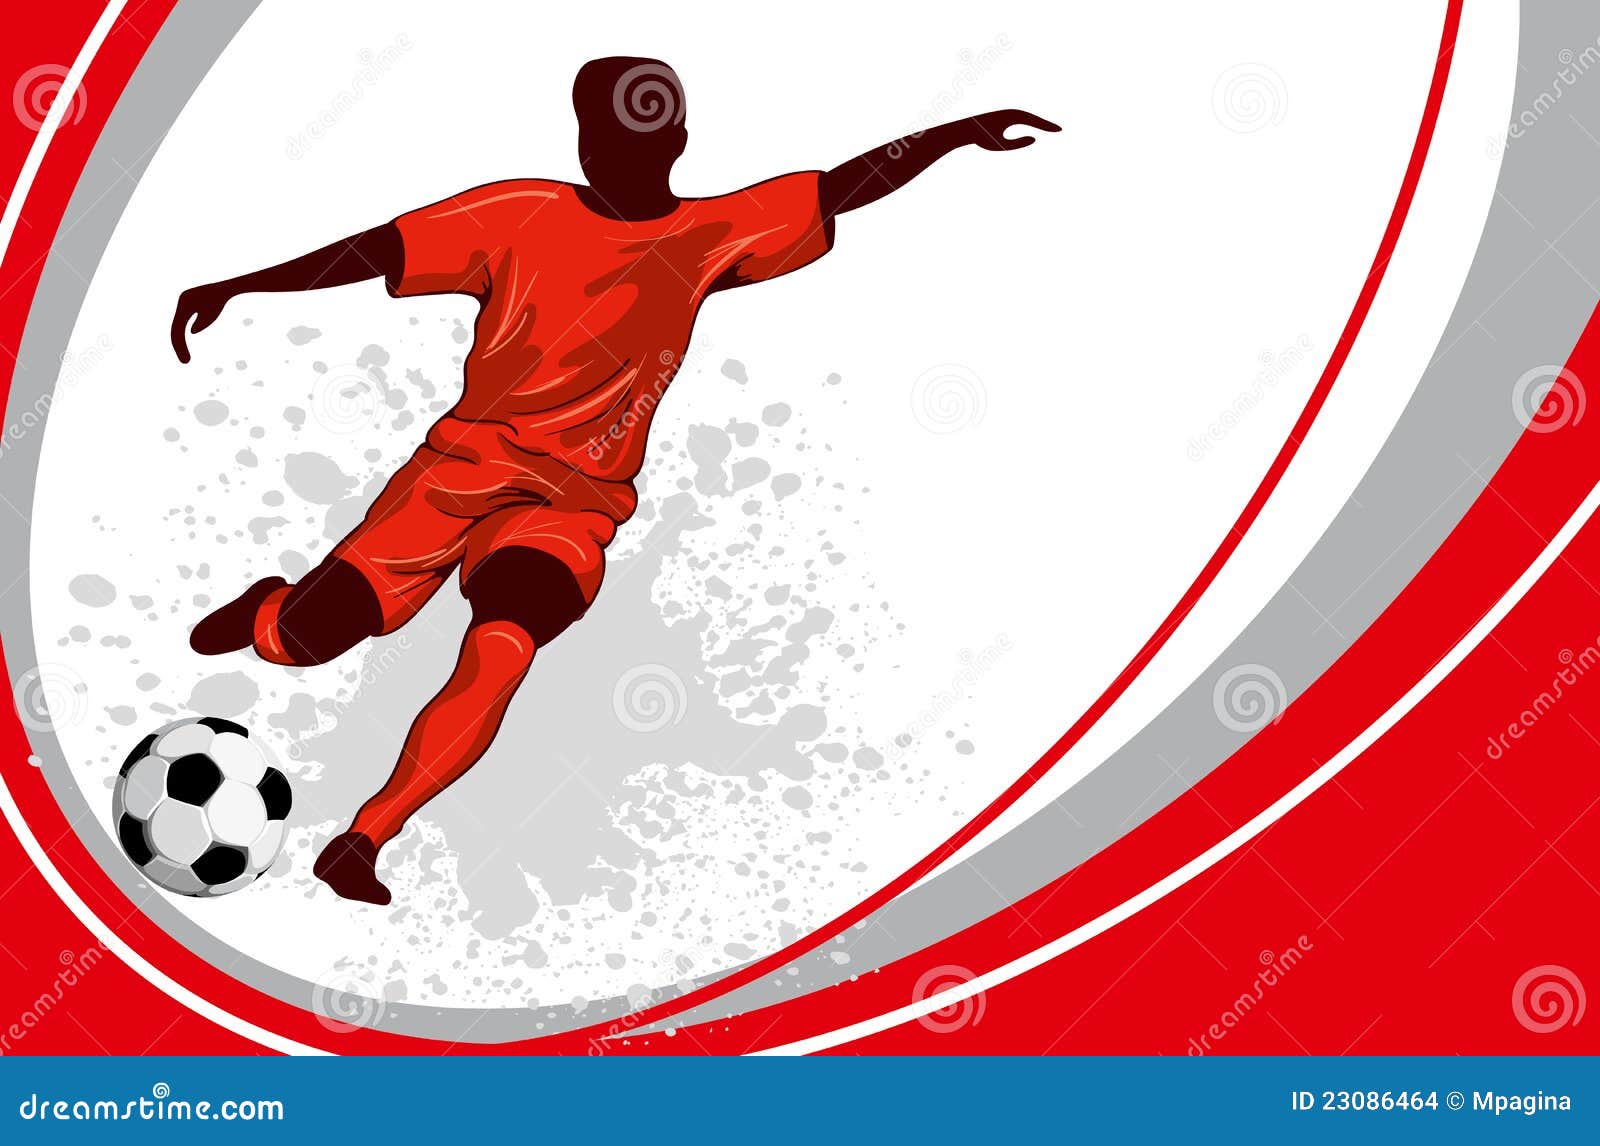 Football poster stock vector. Illustration of championship - 23086464